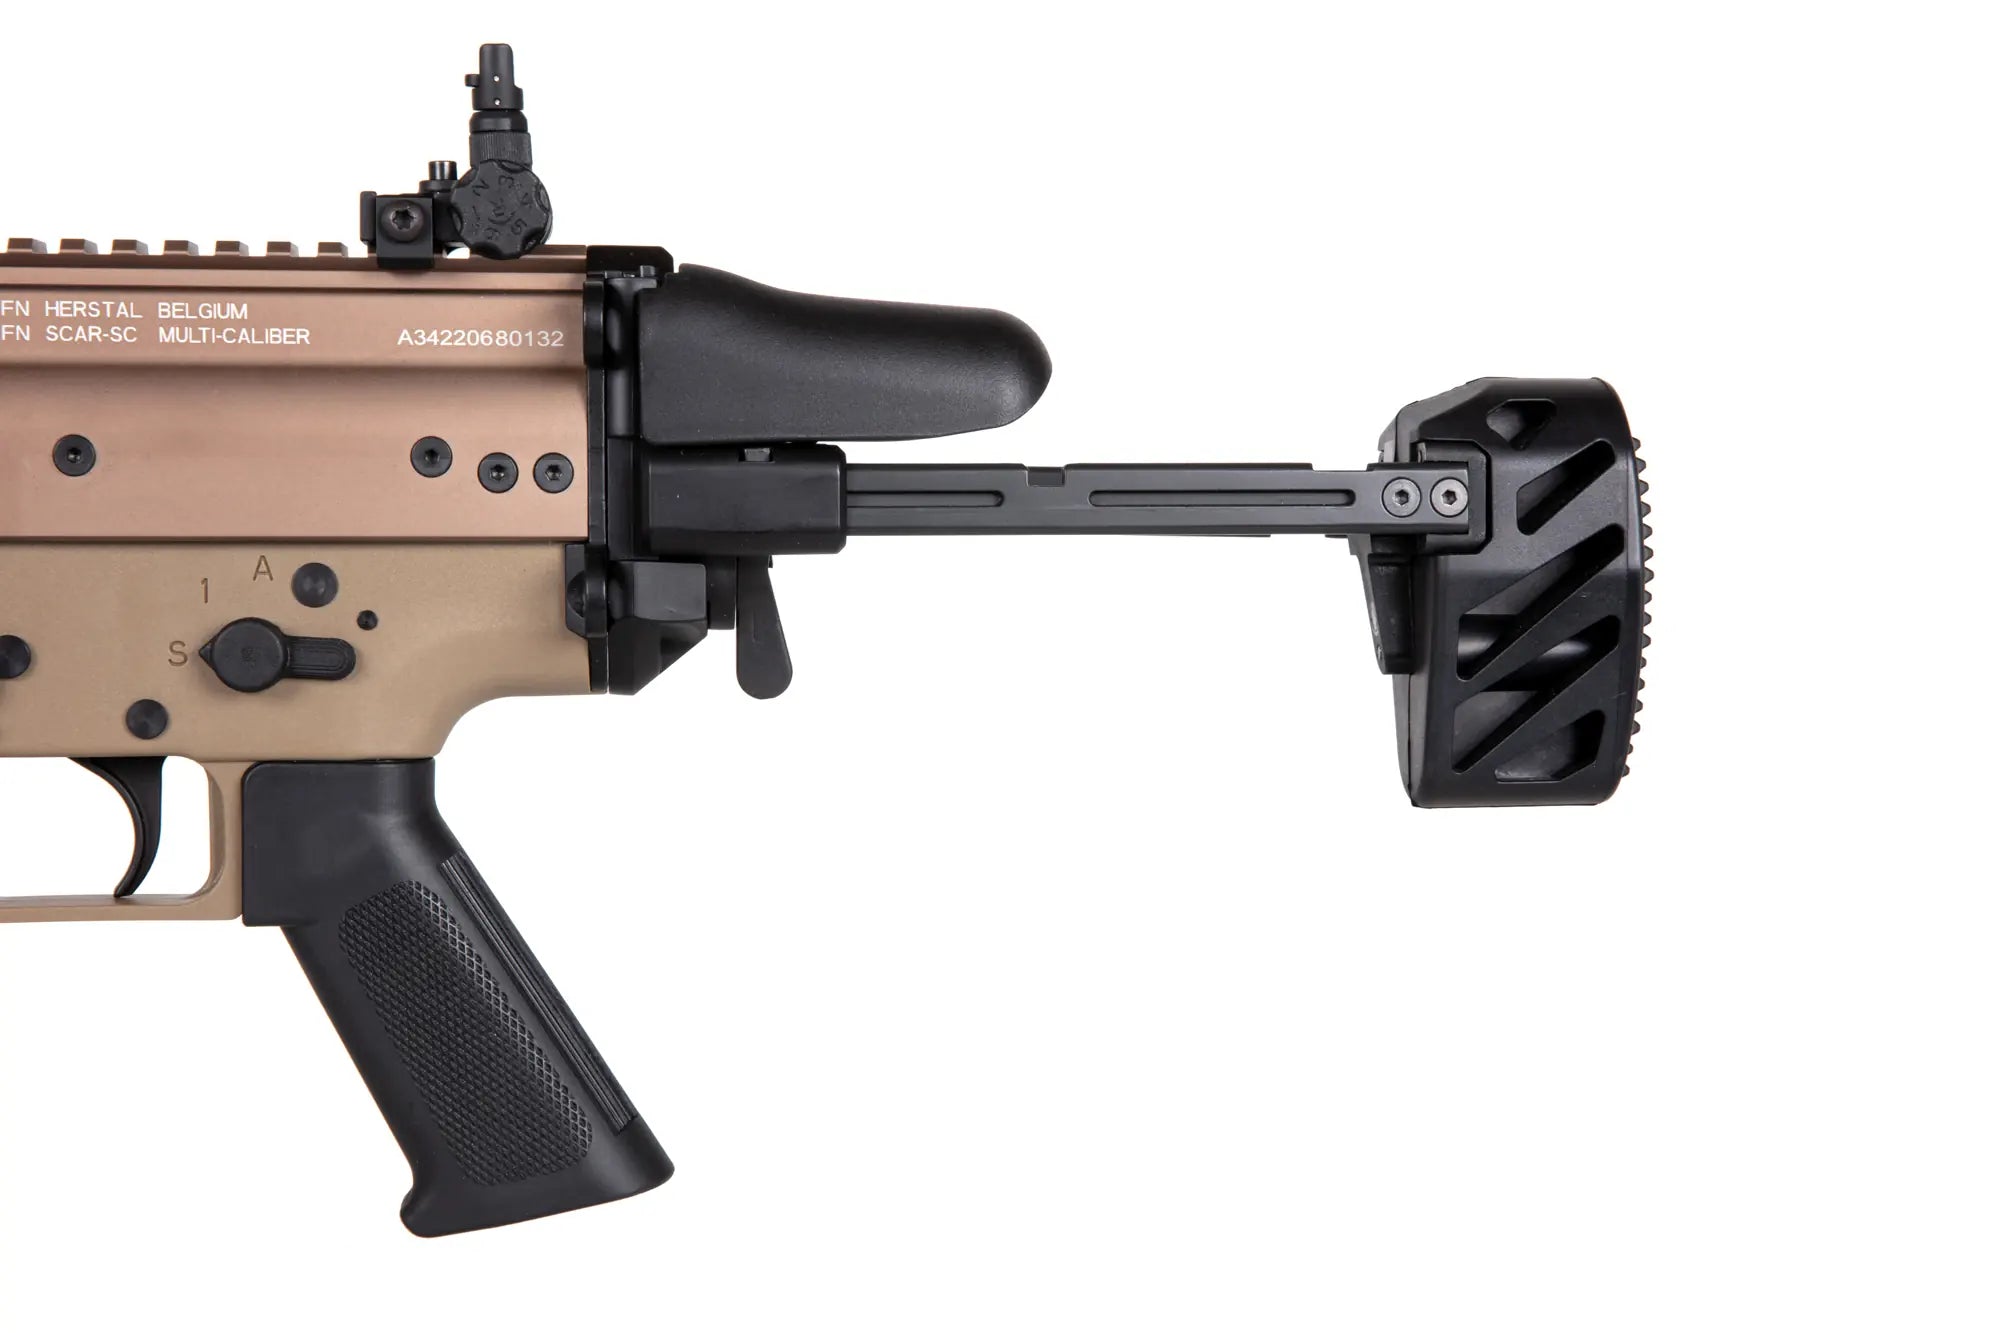 BOLT FN SCAR-SC Carbine replica BRSS Tan-9